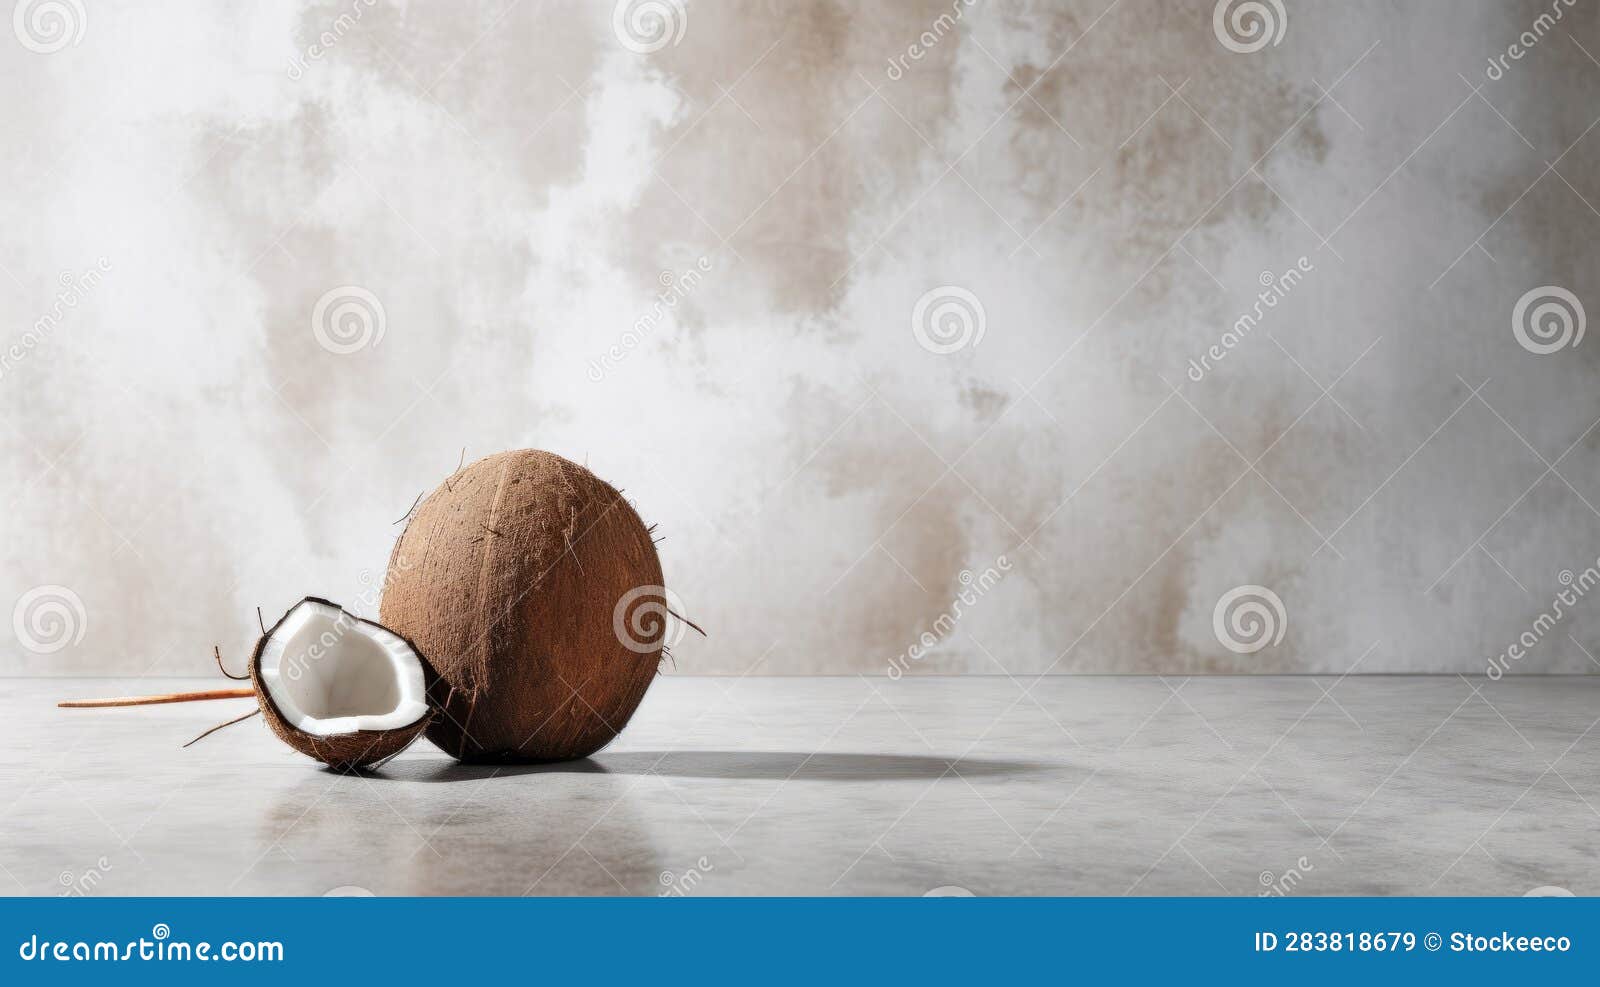 Minimalist Coconut on Polished Concrete Backdrop Stock Illustration ...